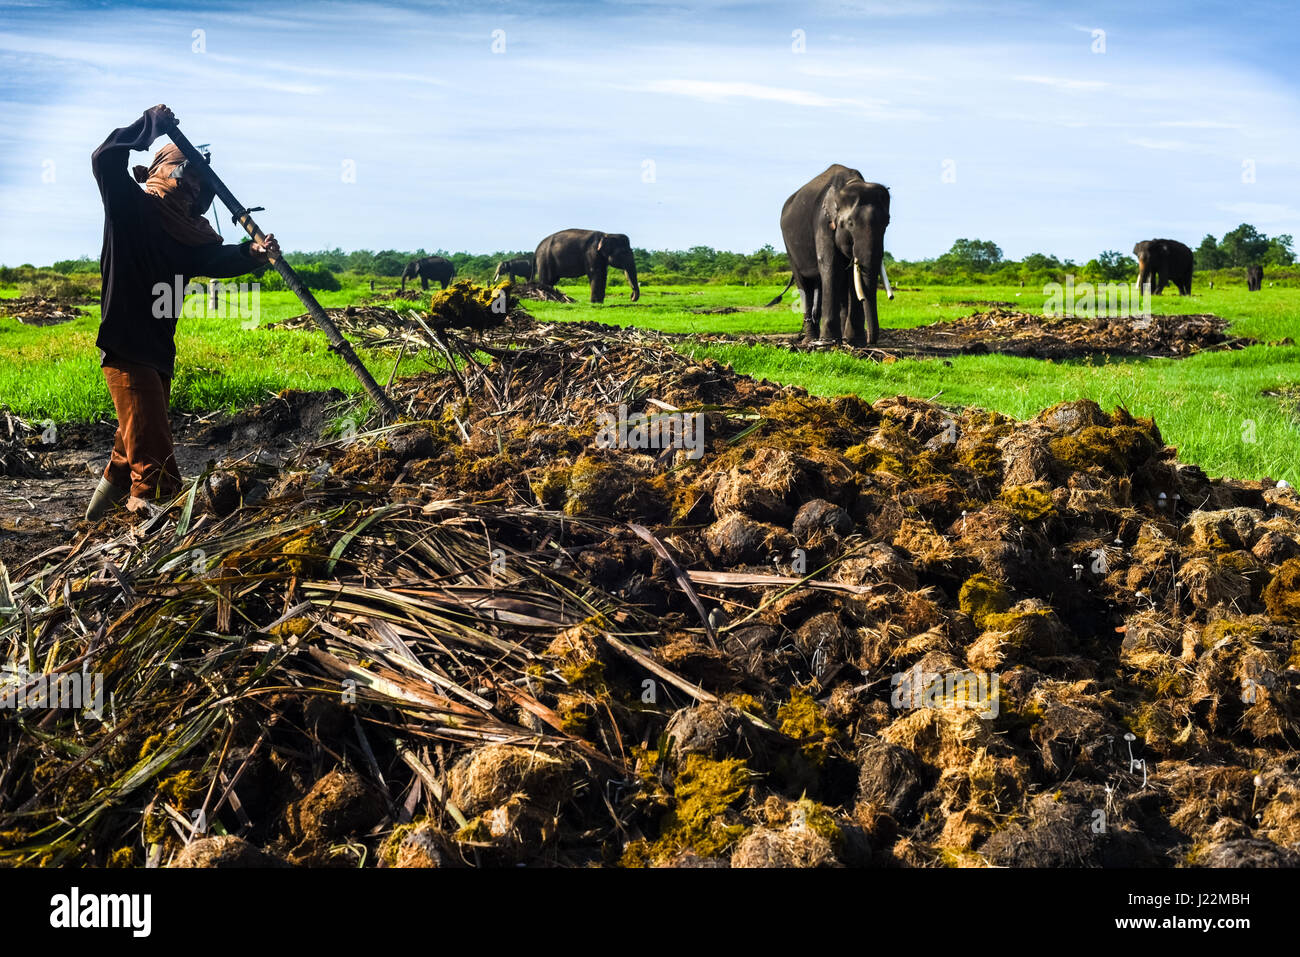 A worker managing elephant dungs at Sumatran elephant rehabilitation center in Way Kambas National Park, Indonesia. Stock Photo